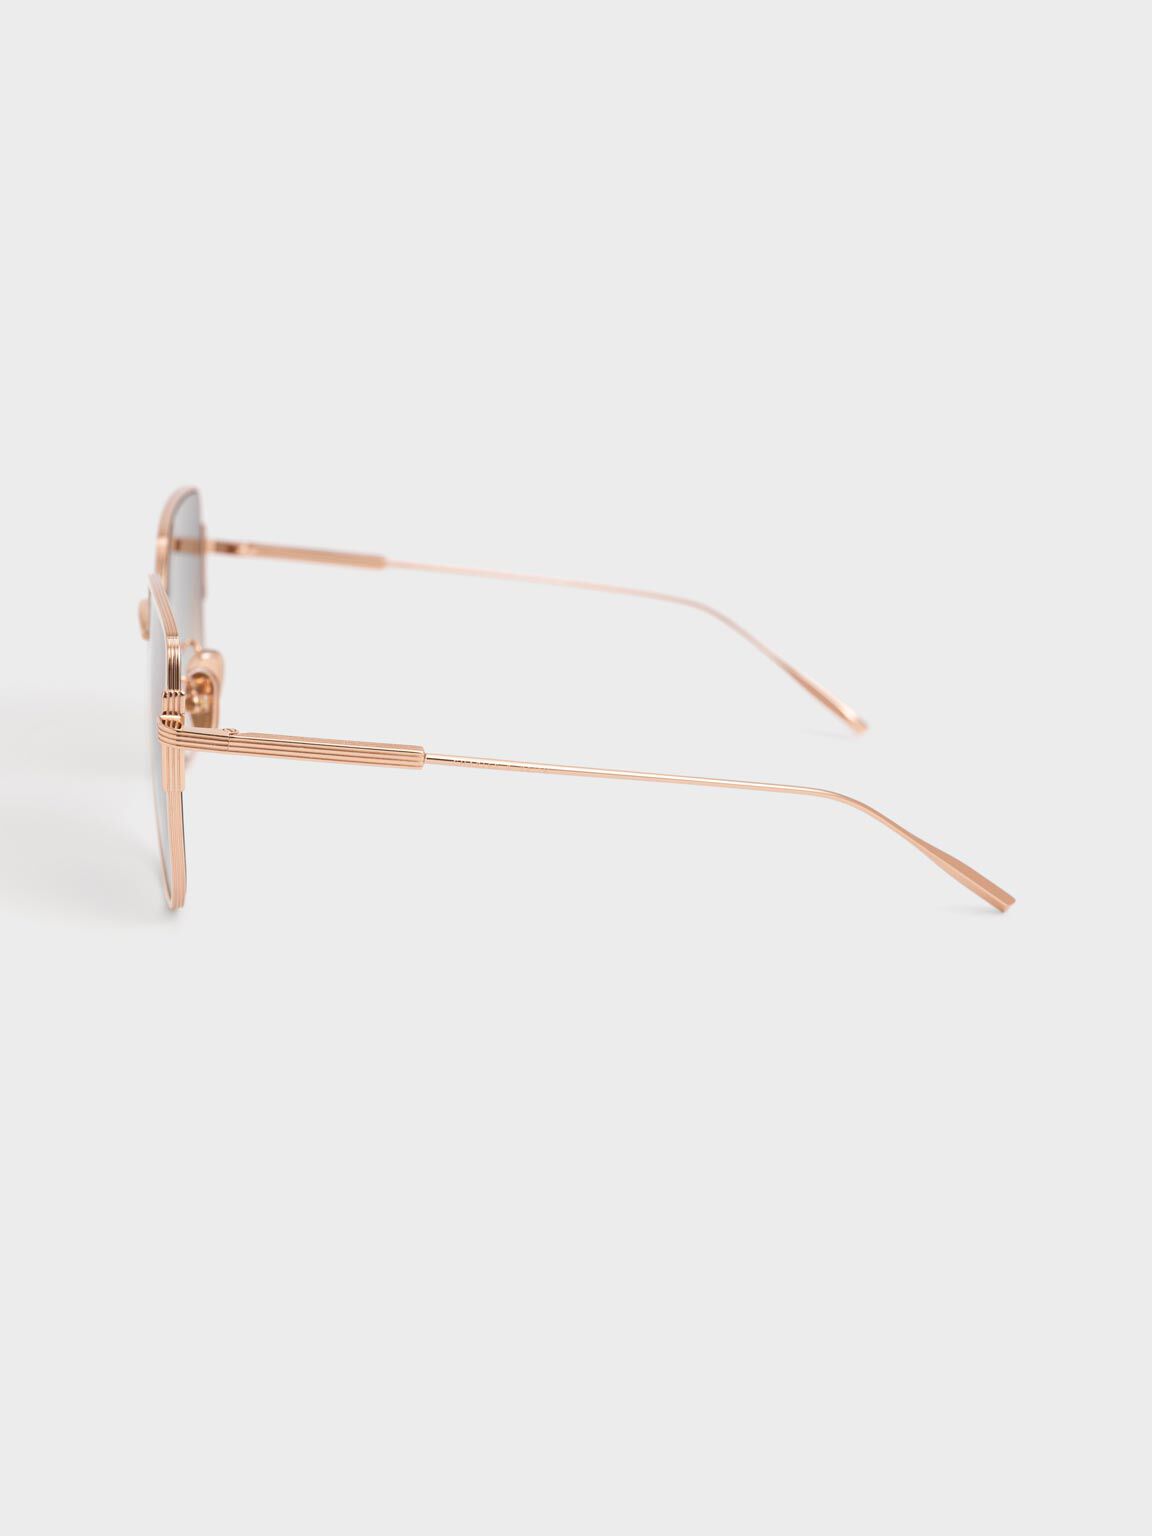 Kacamata Wire Frame Gradient-Tint Butterfly, Cream, hi-res